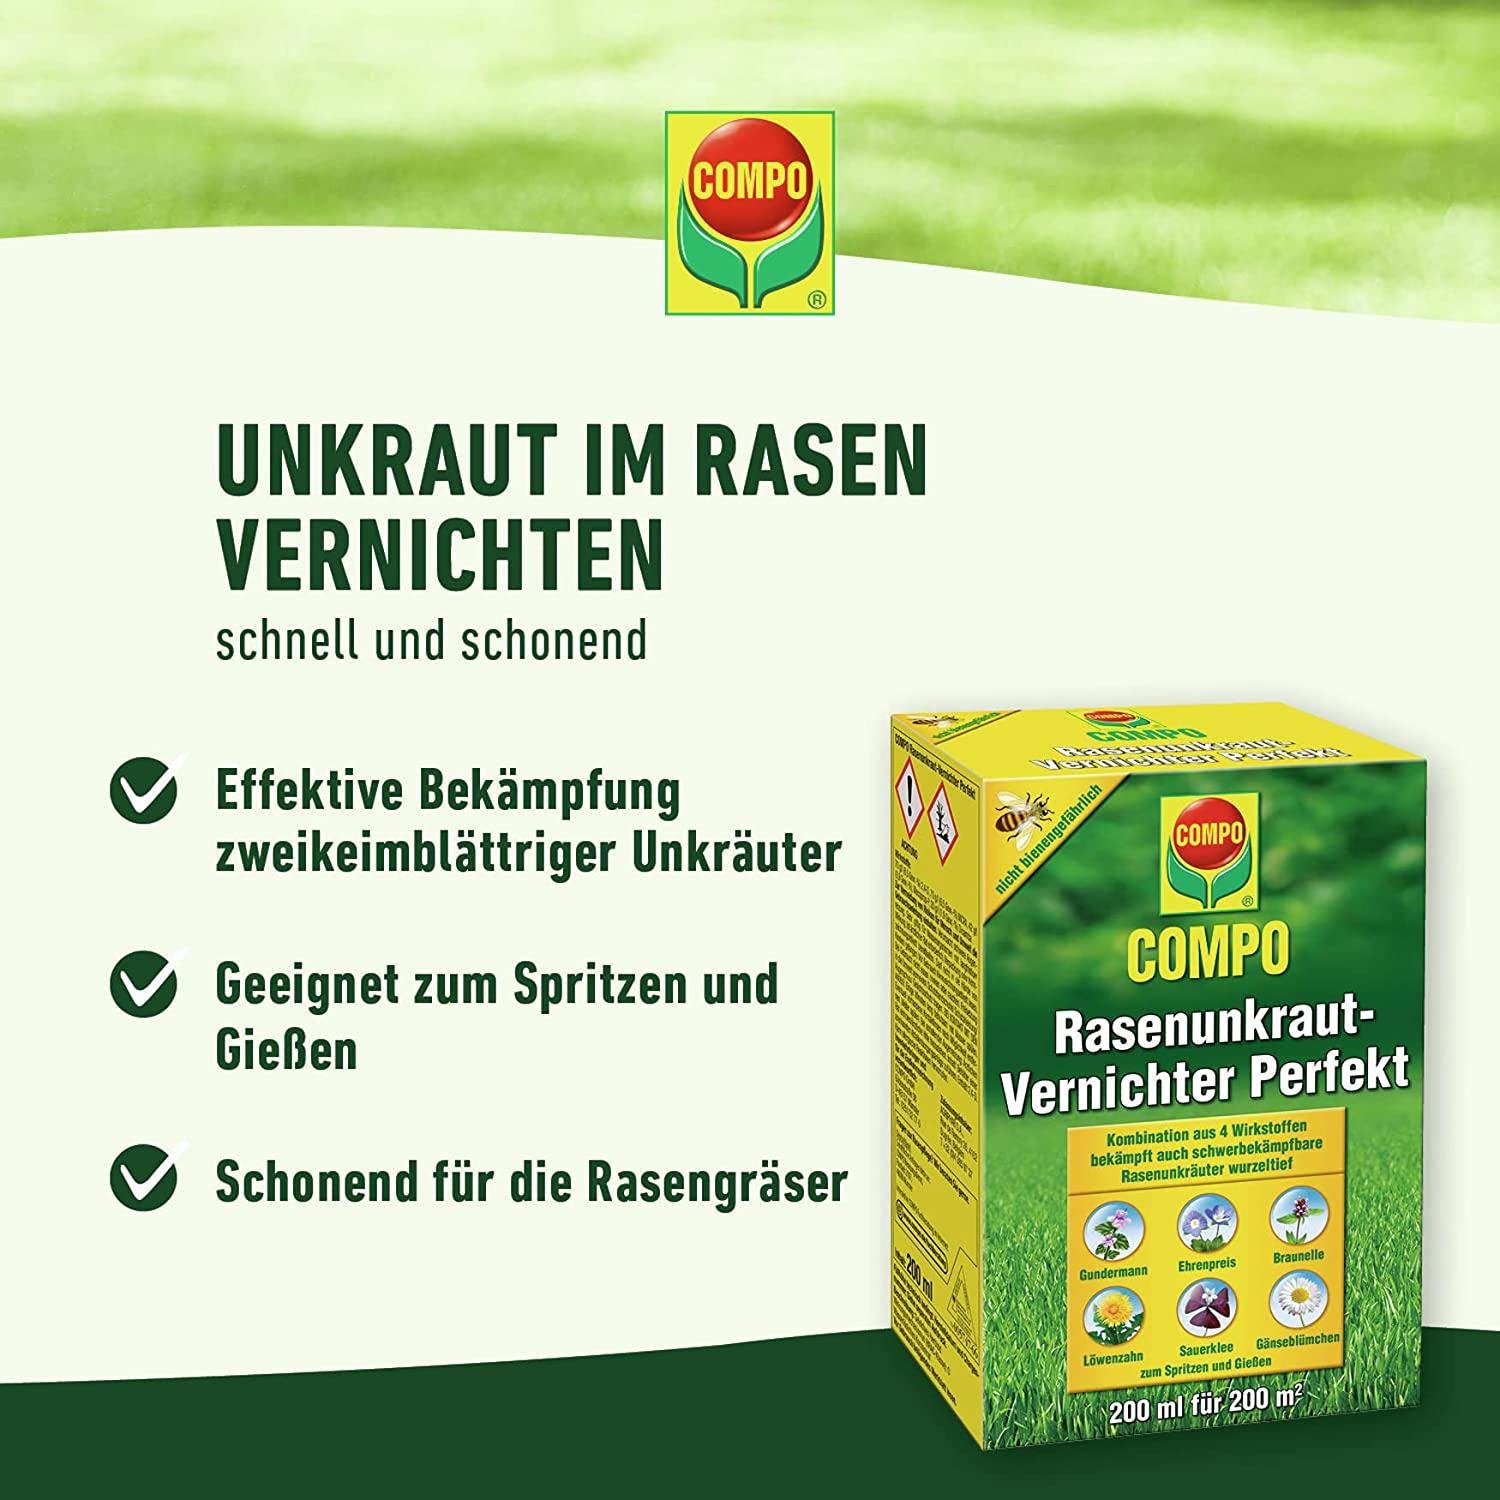 COMPO Rasenunkraut-Vernichter Perfekt 110 ml für 110 m² 